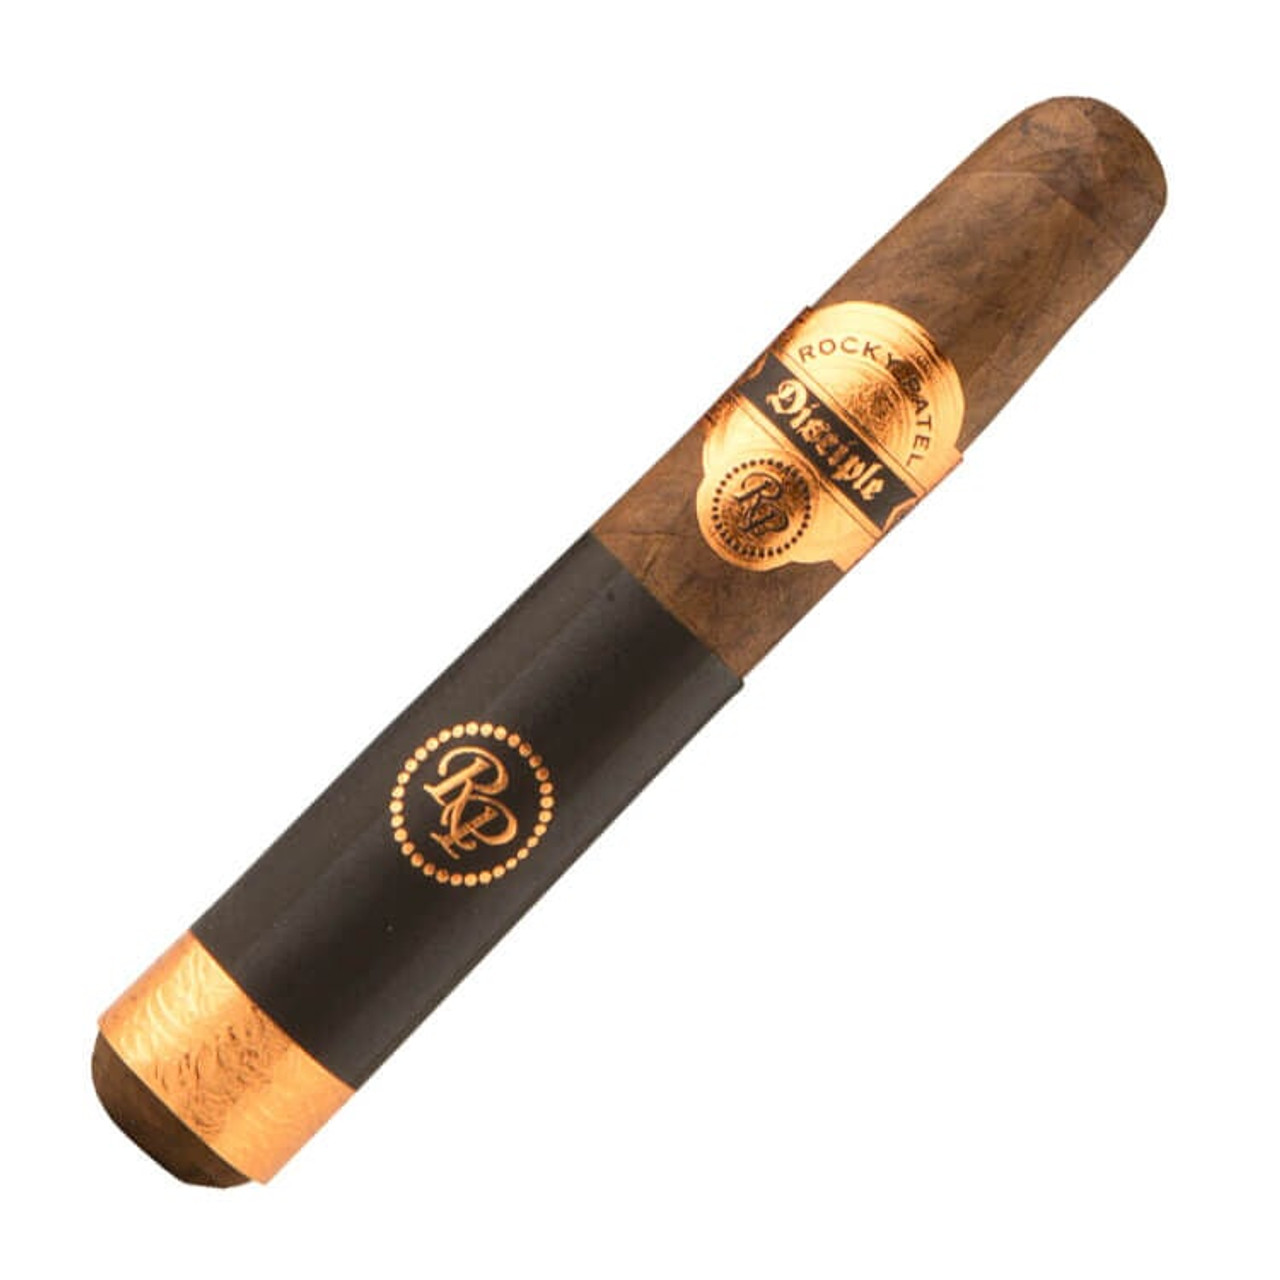 Rocky Patel Disciple Bala Cigars - 5.75 x 58 Single